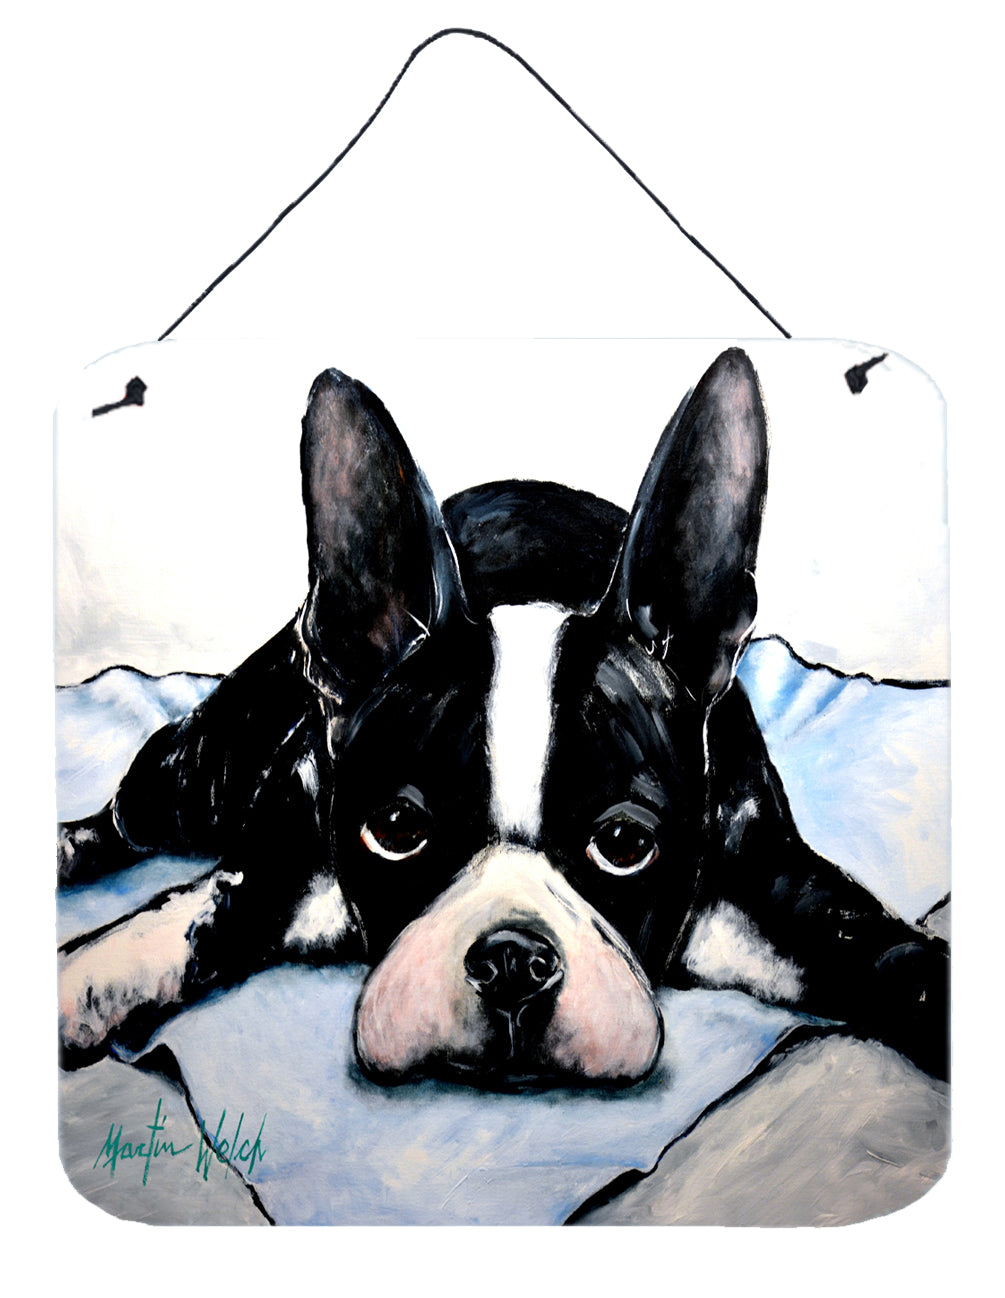 Buy this Boston Terrier Jake Dog Tired Wall or Door Hanging Prints